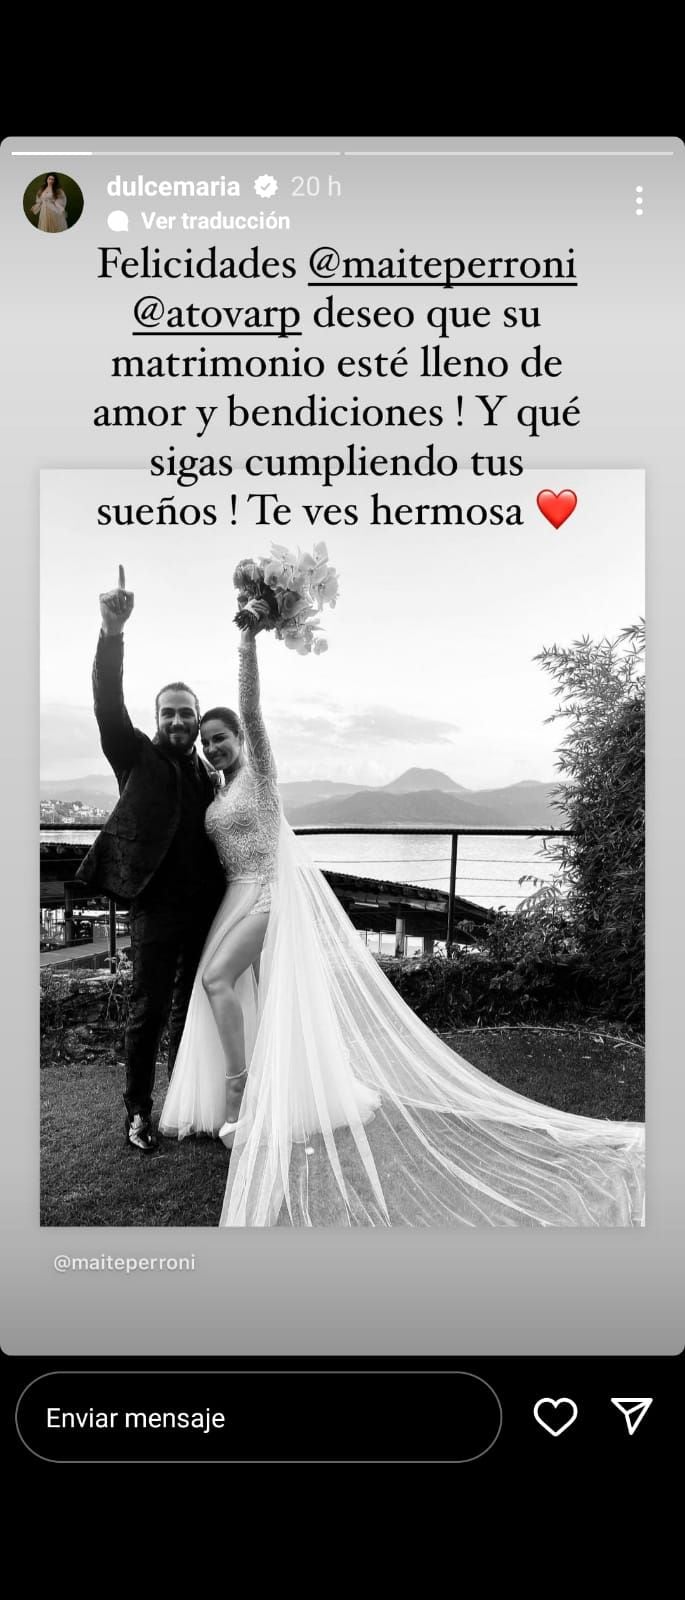 Dulce María le dedicó un mensaje a Maite Perroni, aunque no asistió a la boda. (Foto: Instagram / @dulcemaria).